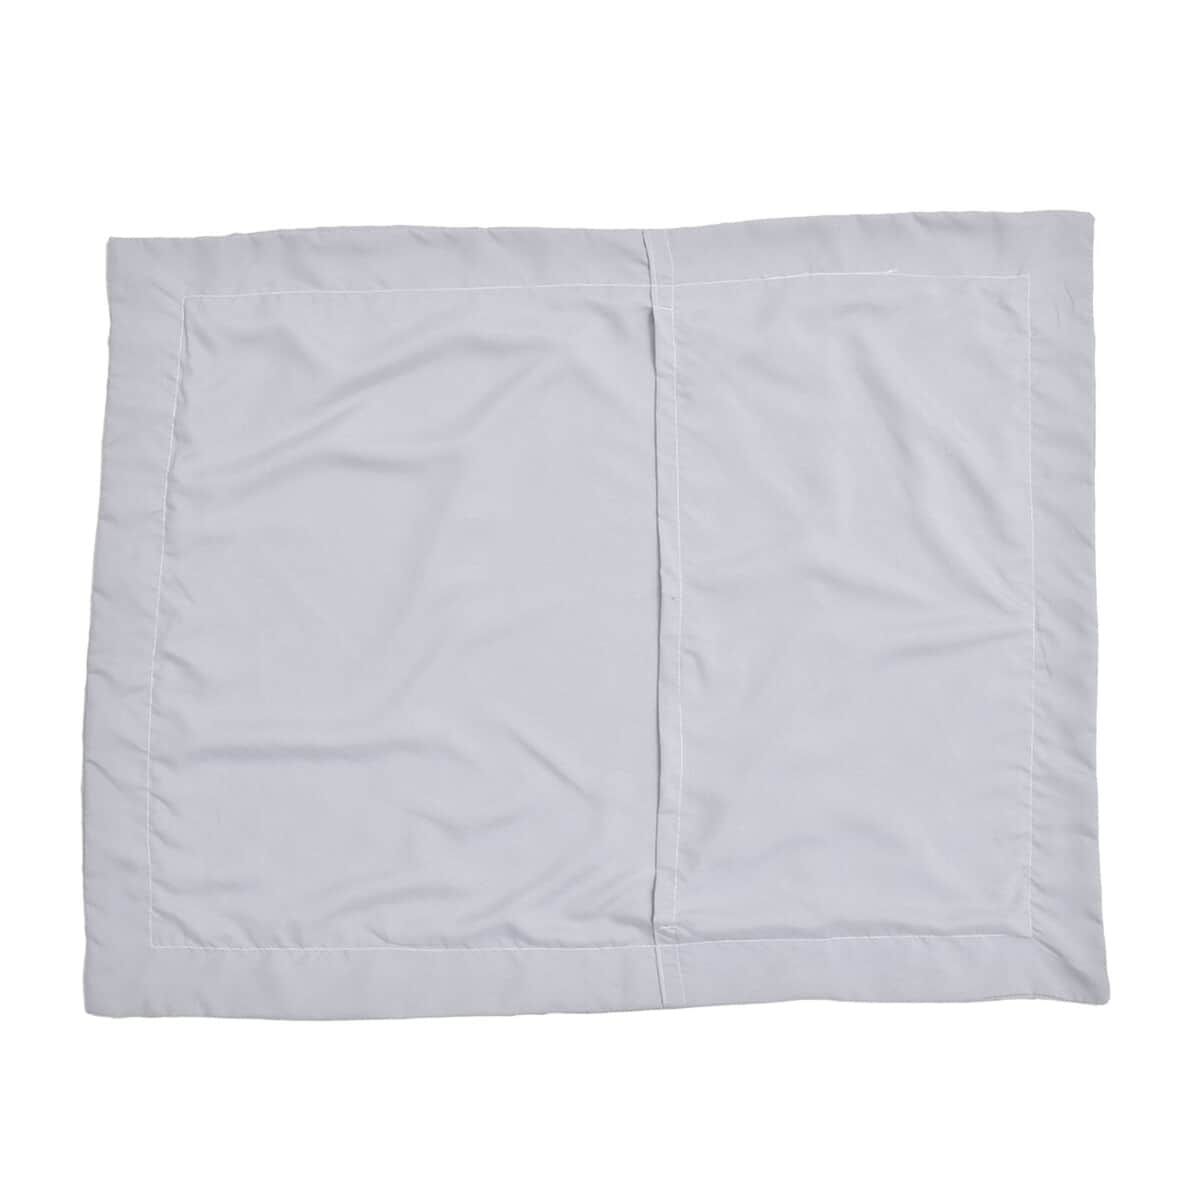 Homesmart Gray Quilted Pattern Microfiber 3pcs Comforter Set - Queen image number 6